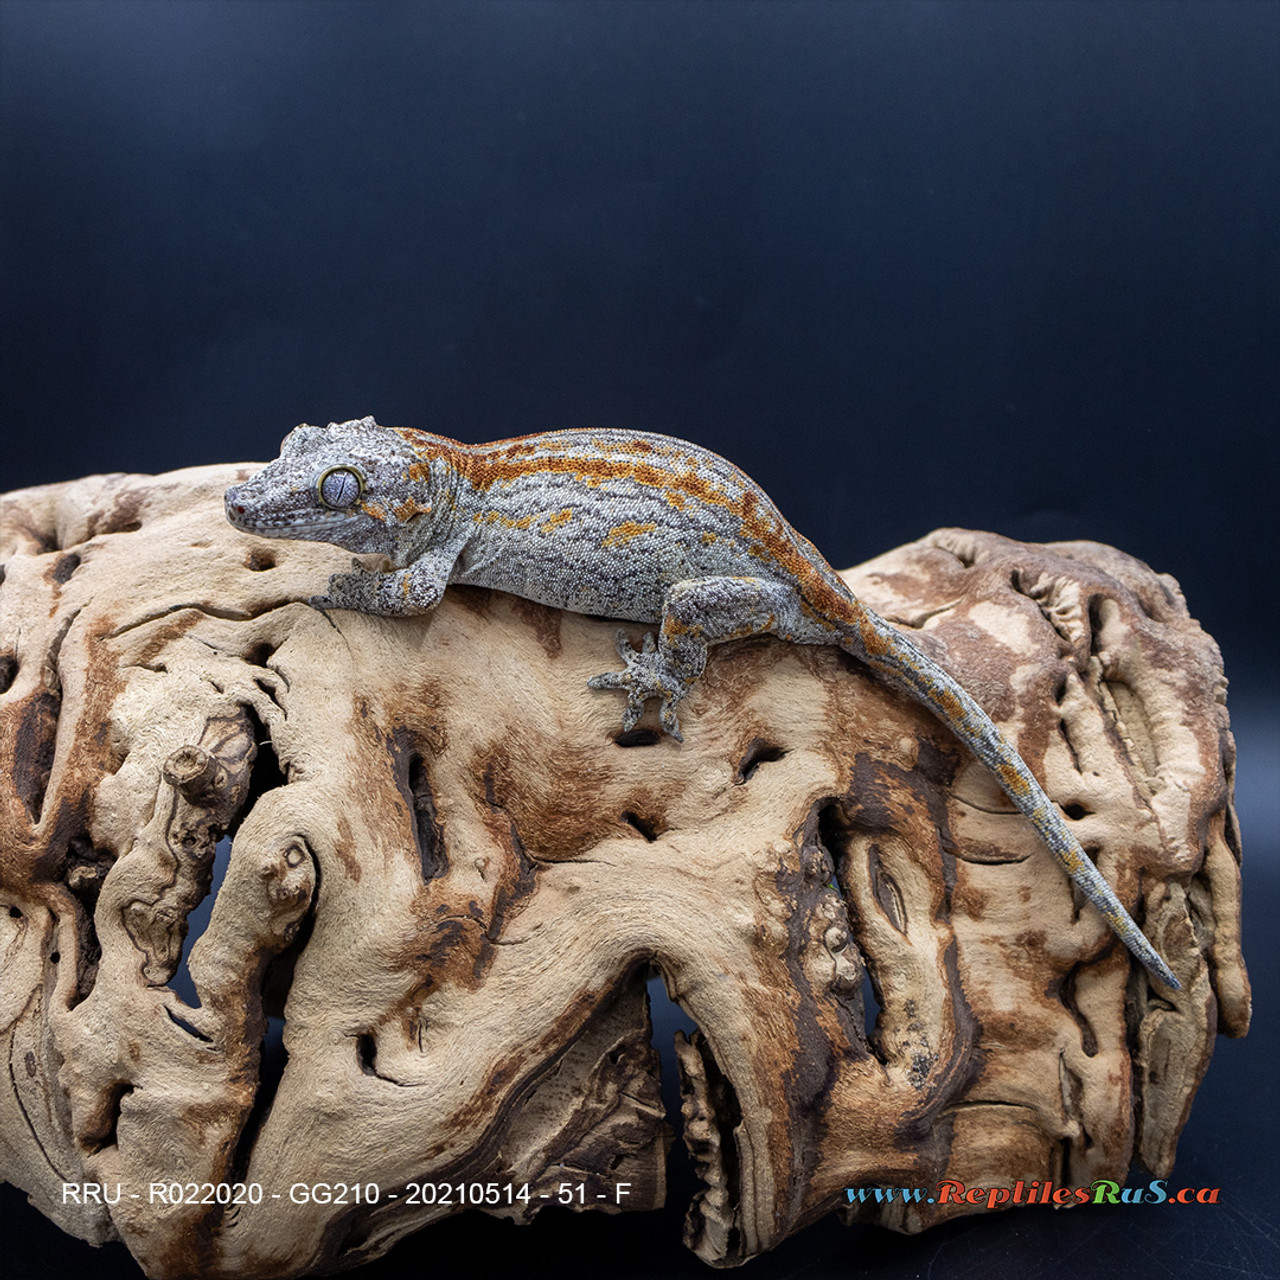 Gargoyle Gecko (51g Female) GG210 Proven Breeder - See Notes